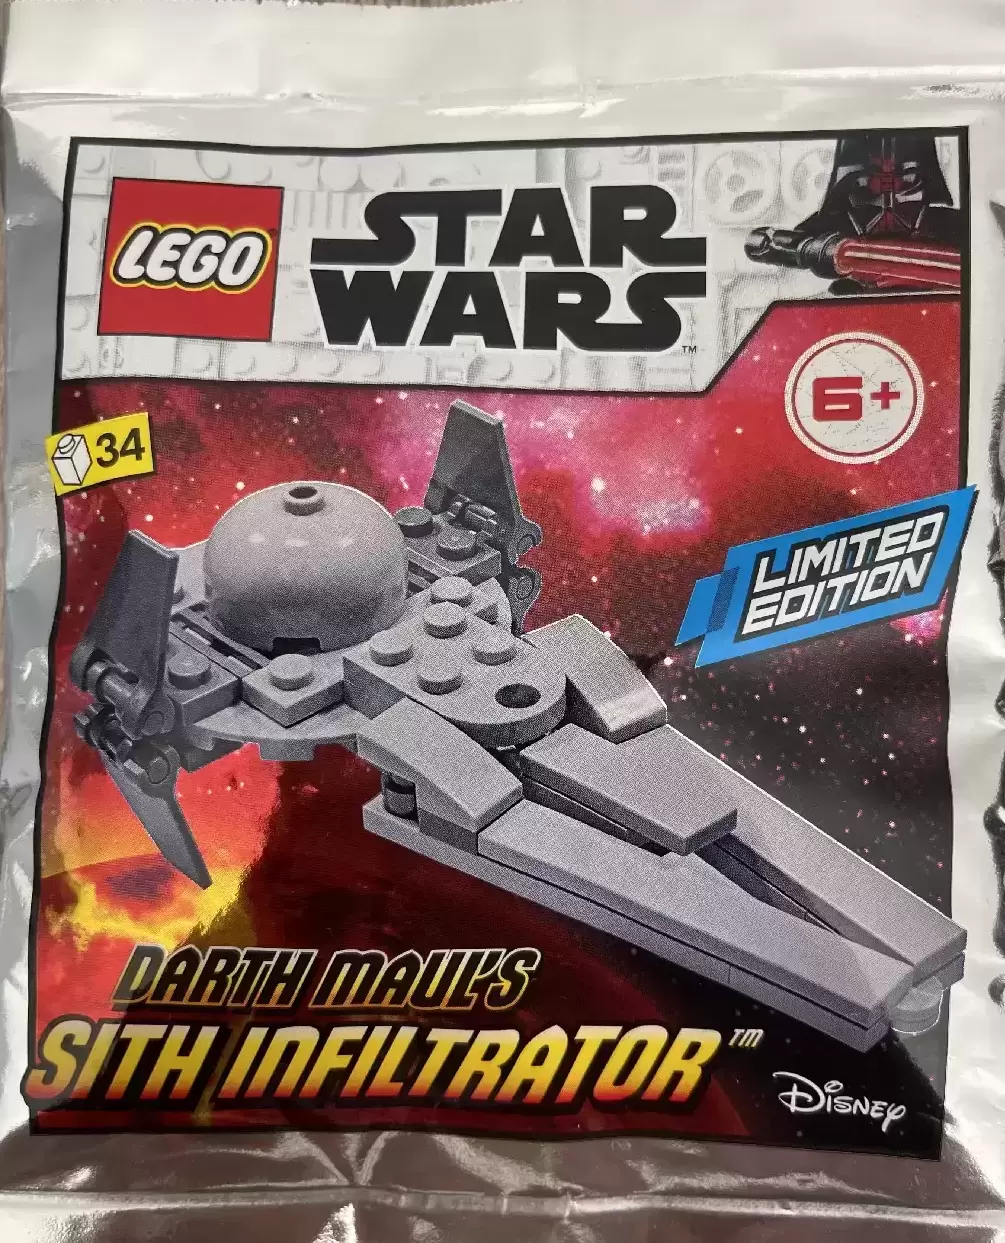 LEGO Star Wars - Darth Maul’s Sith Infiltrator